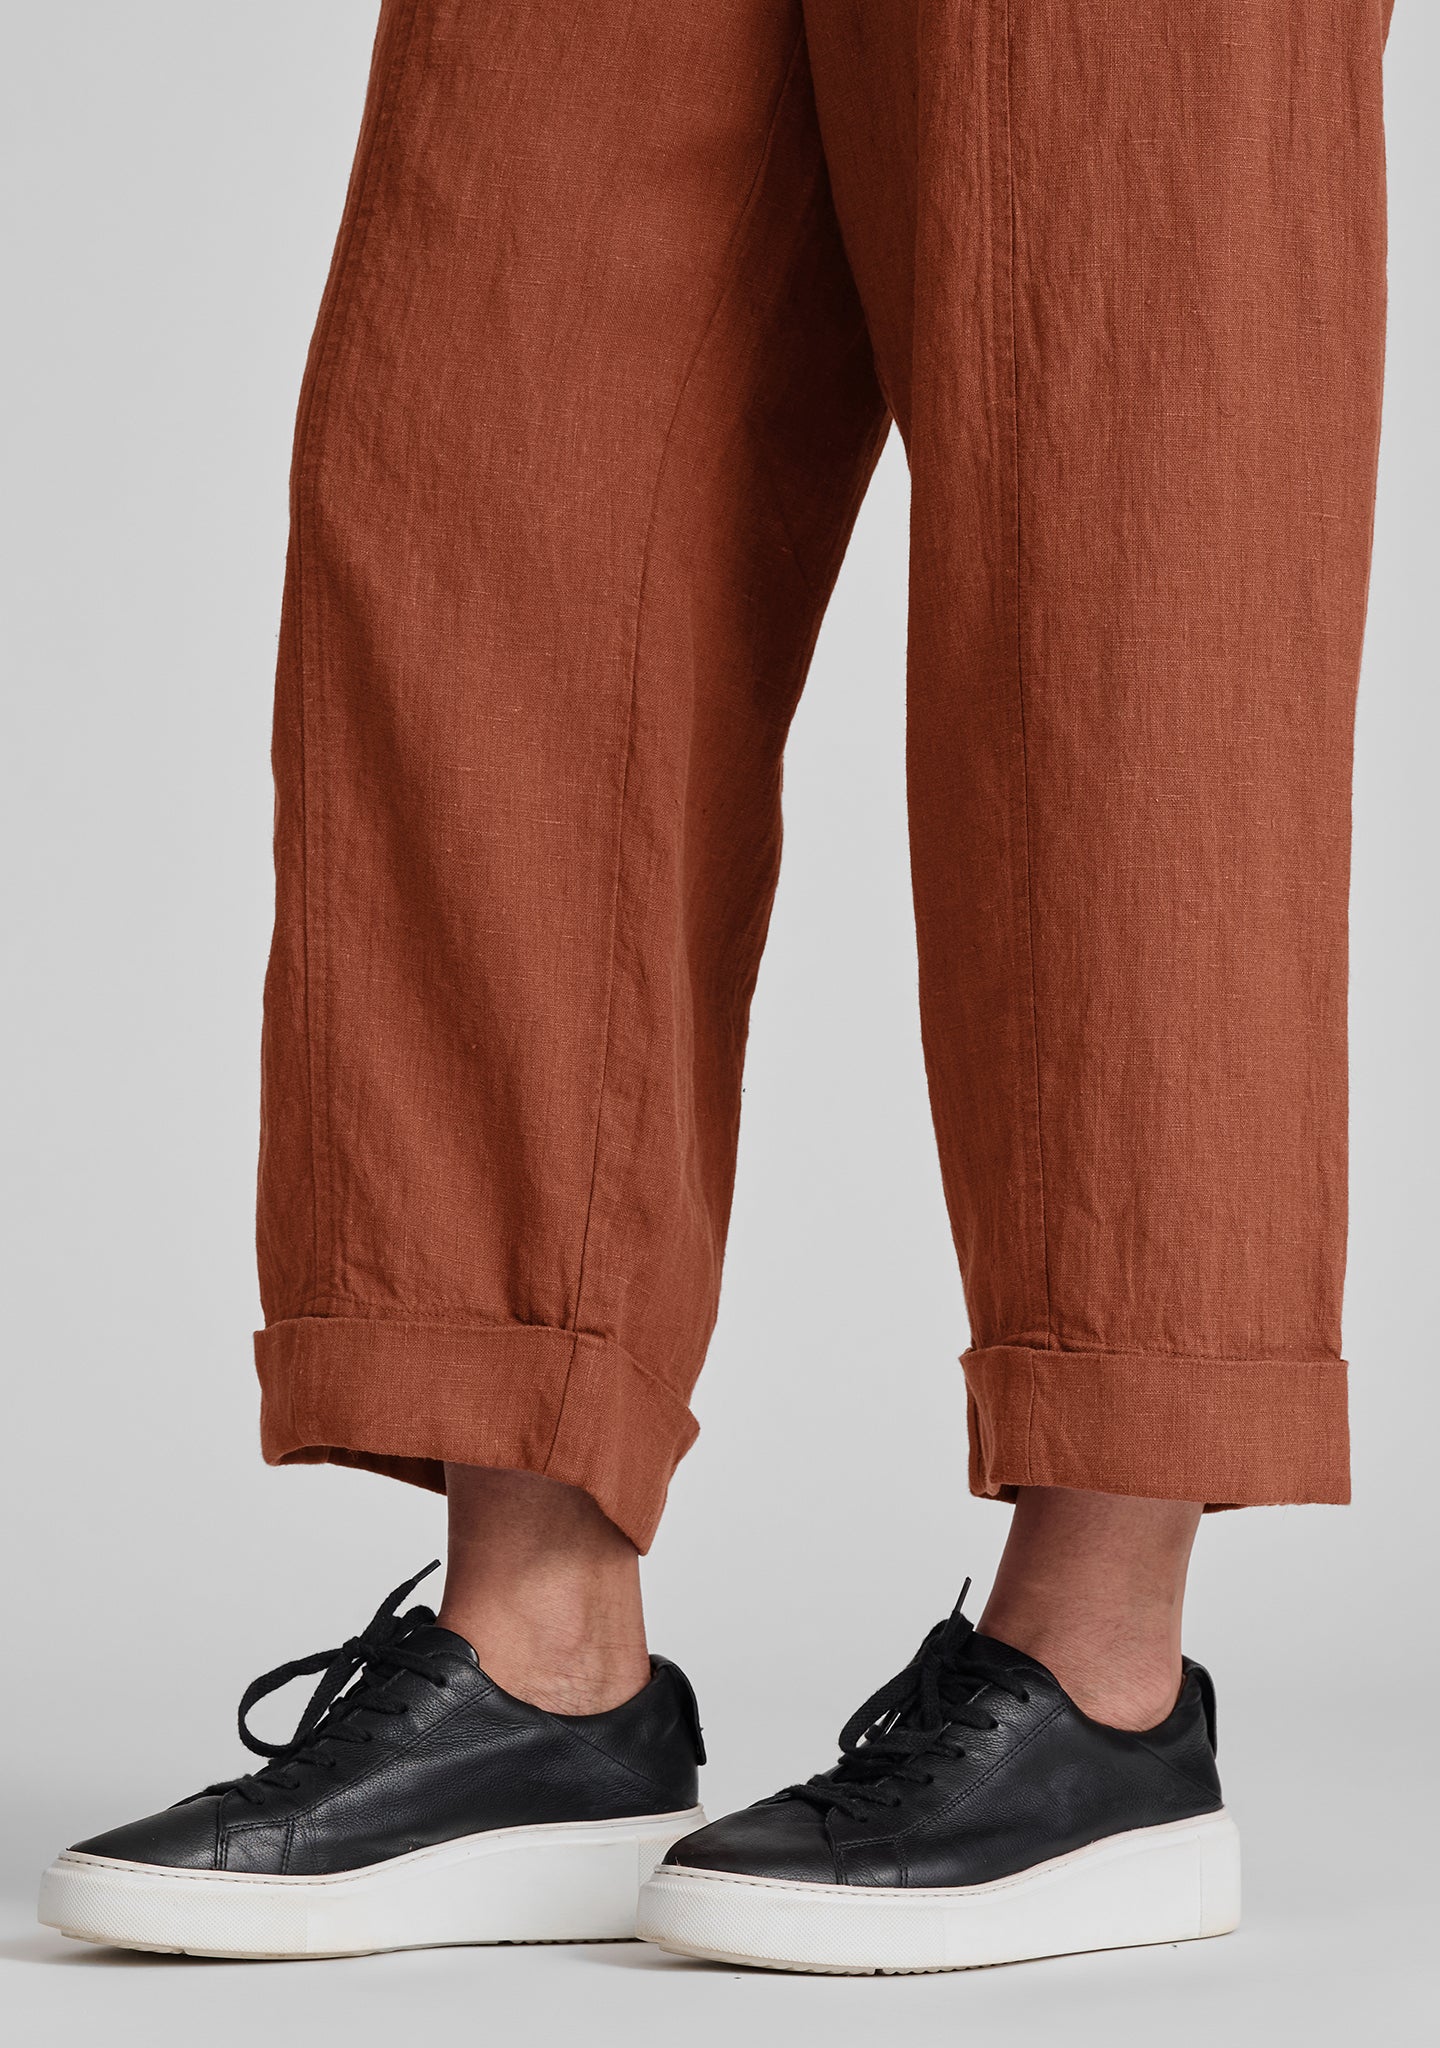 keen pant linen drawstring pants details